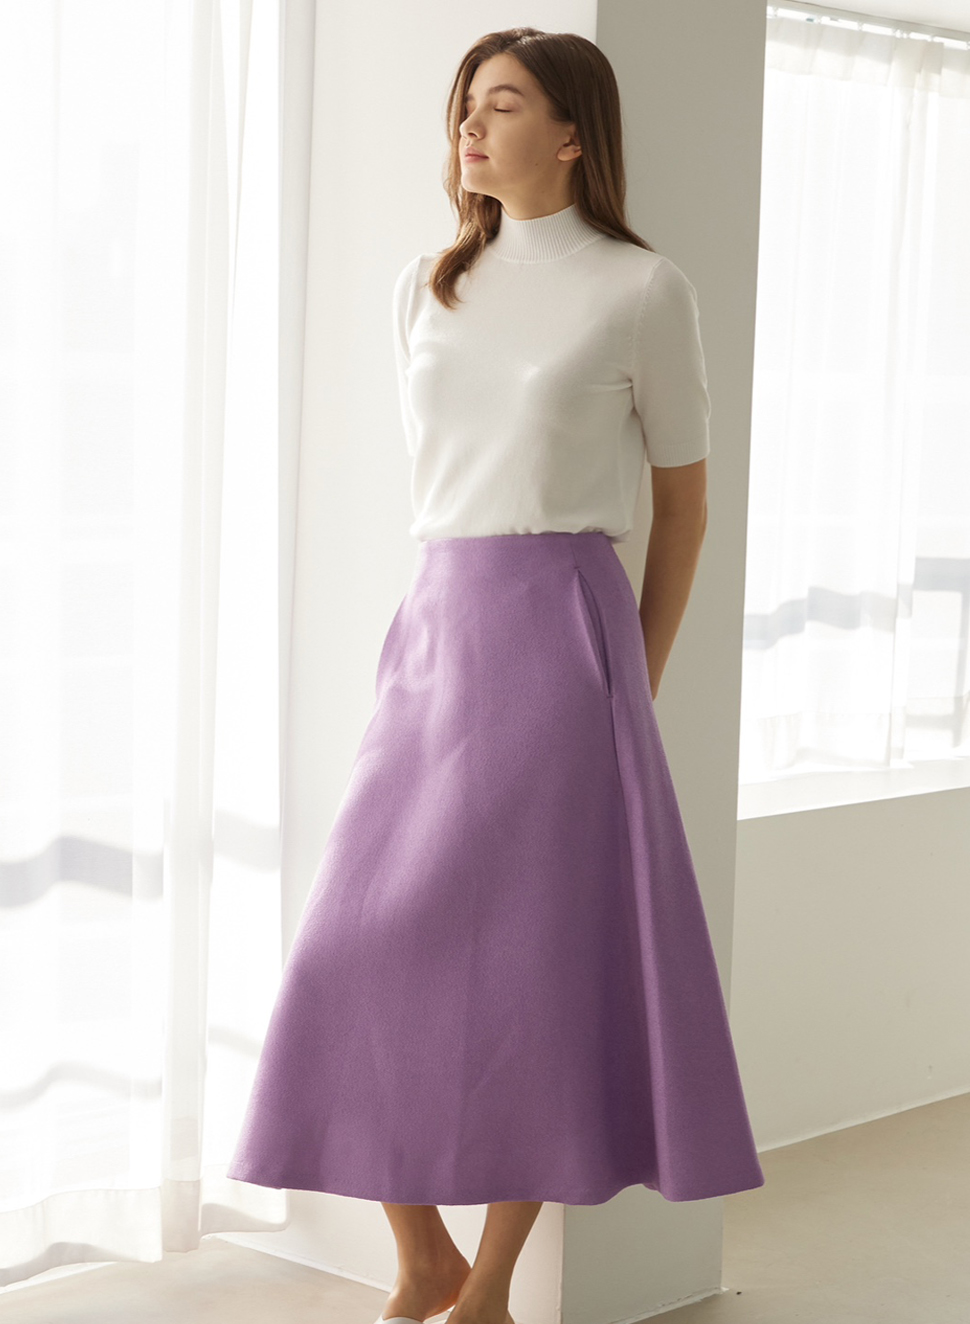 martelle skirt (provence purple)